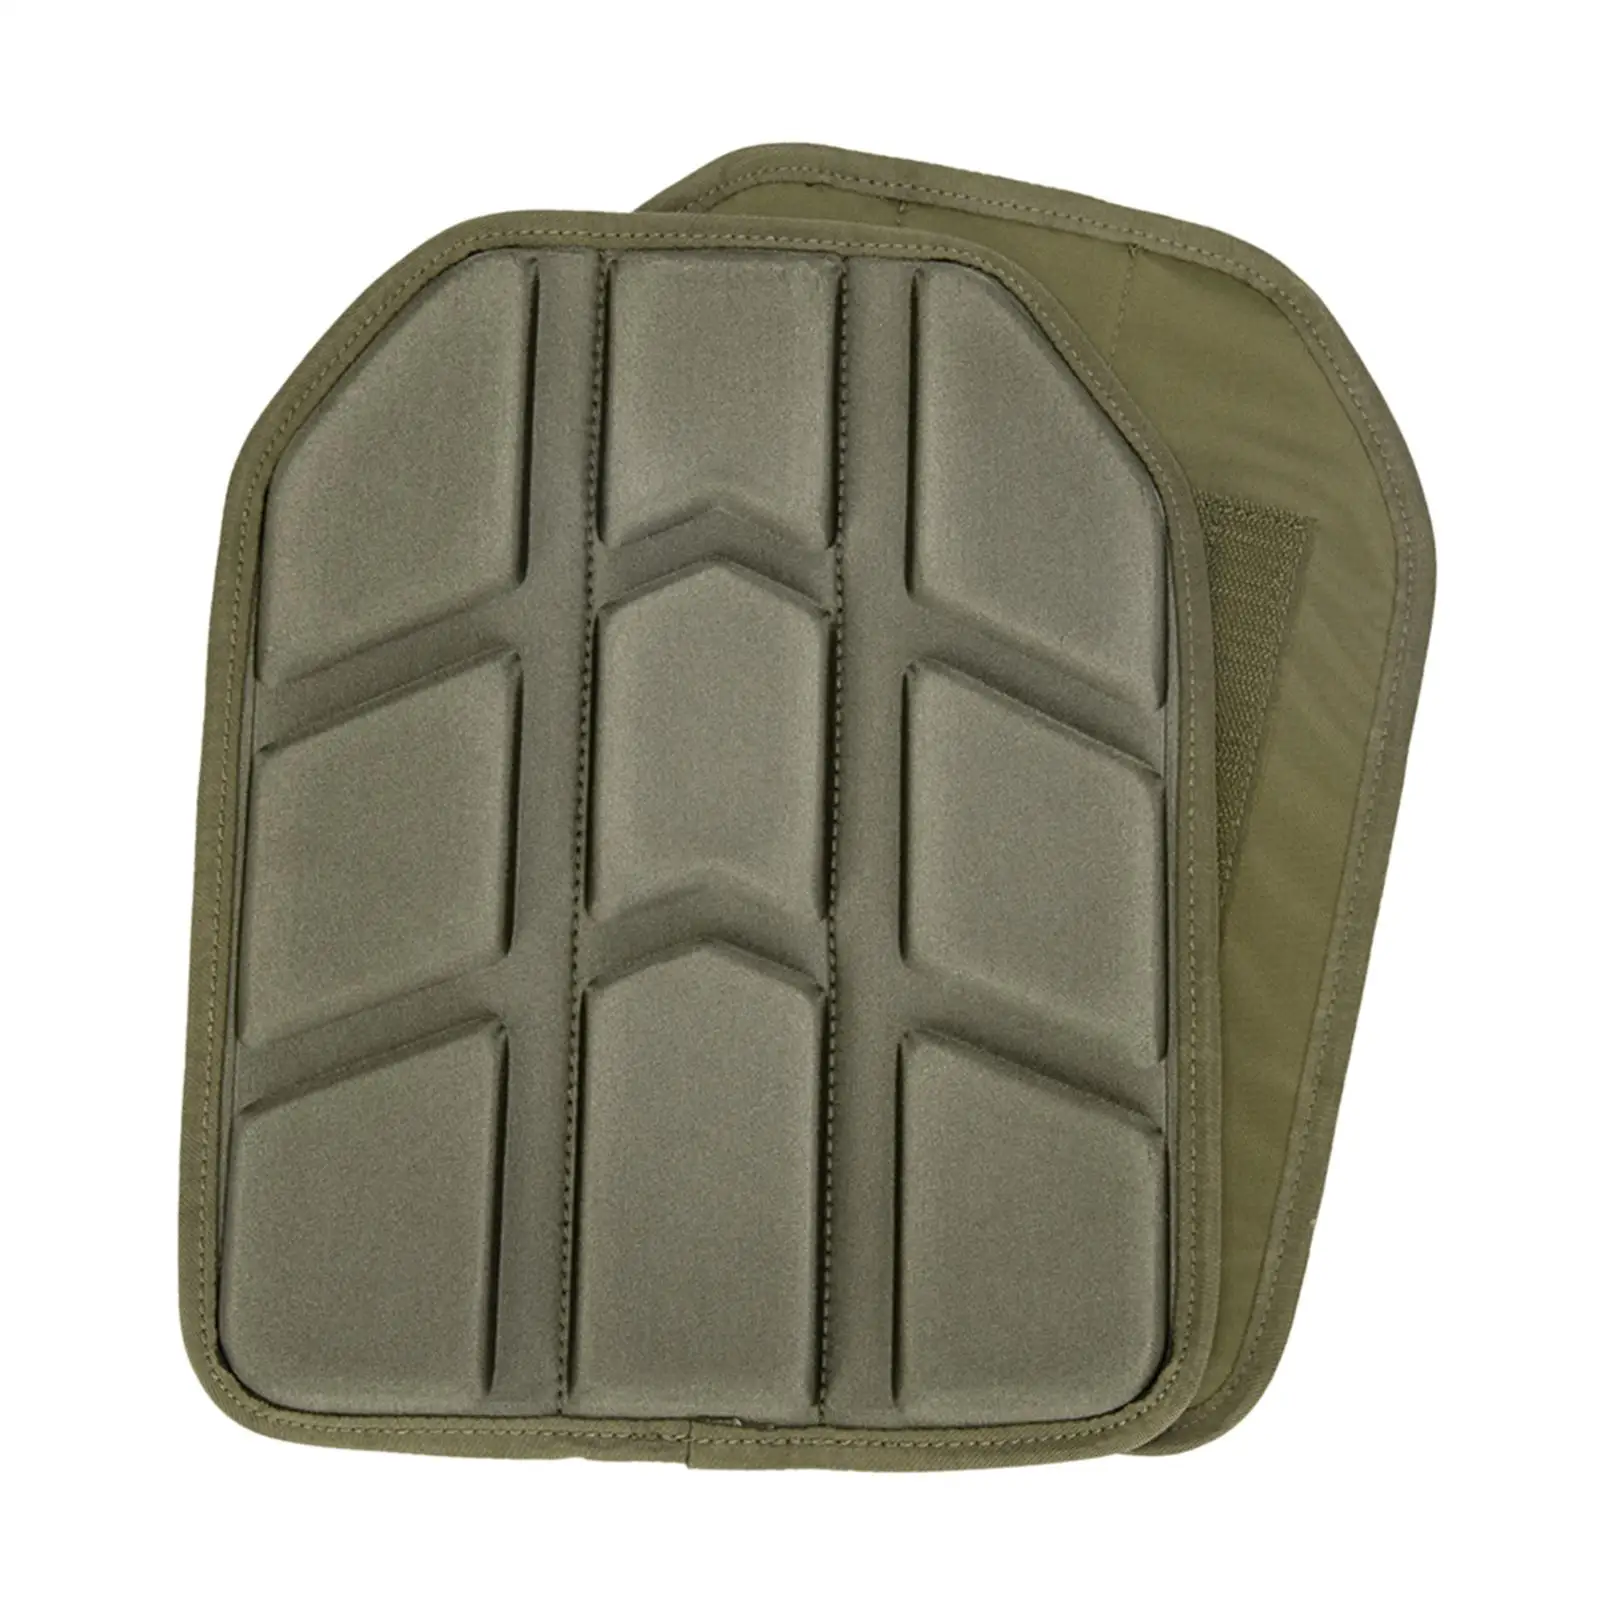 2x Shock Plates Removable Body Carrier Vest Adjustable for